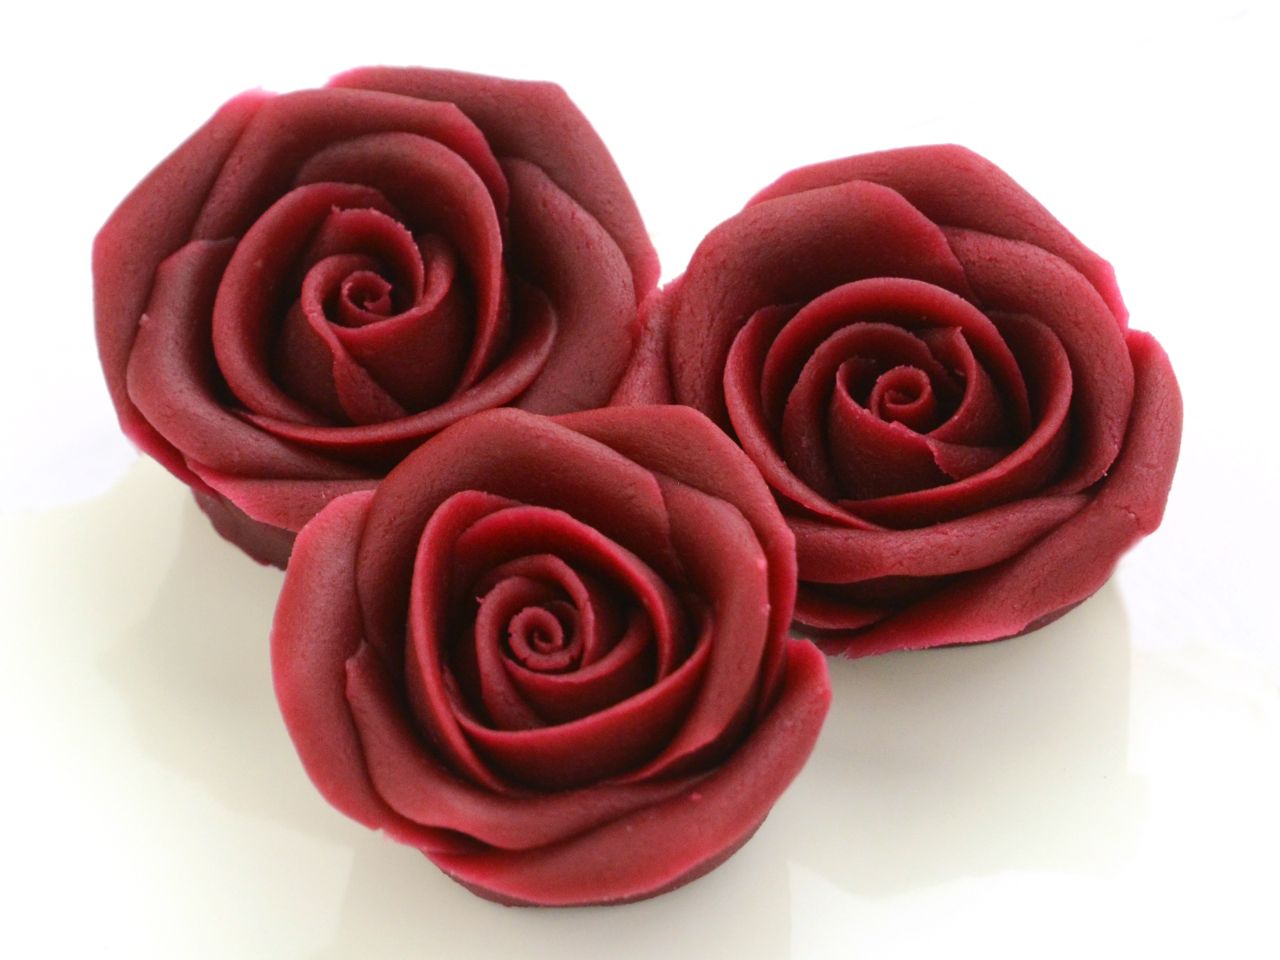 Große Marzipan-Rosen, Bordeaux-Rot, 16 Stück, 4,5 x 2,5 cm